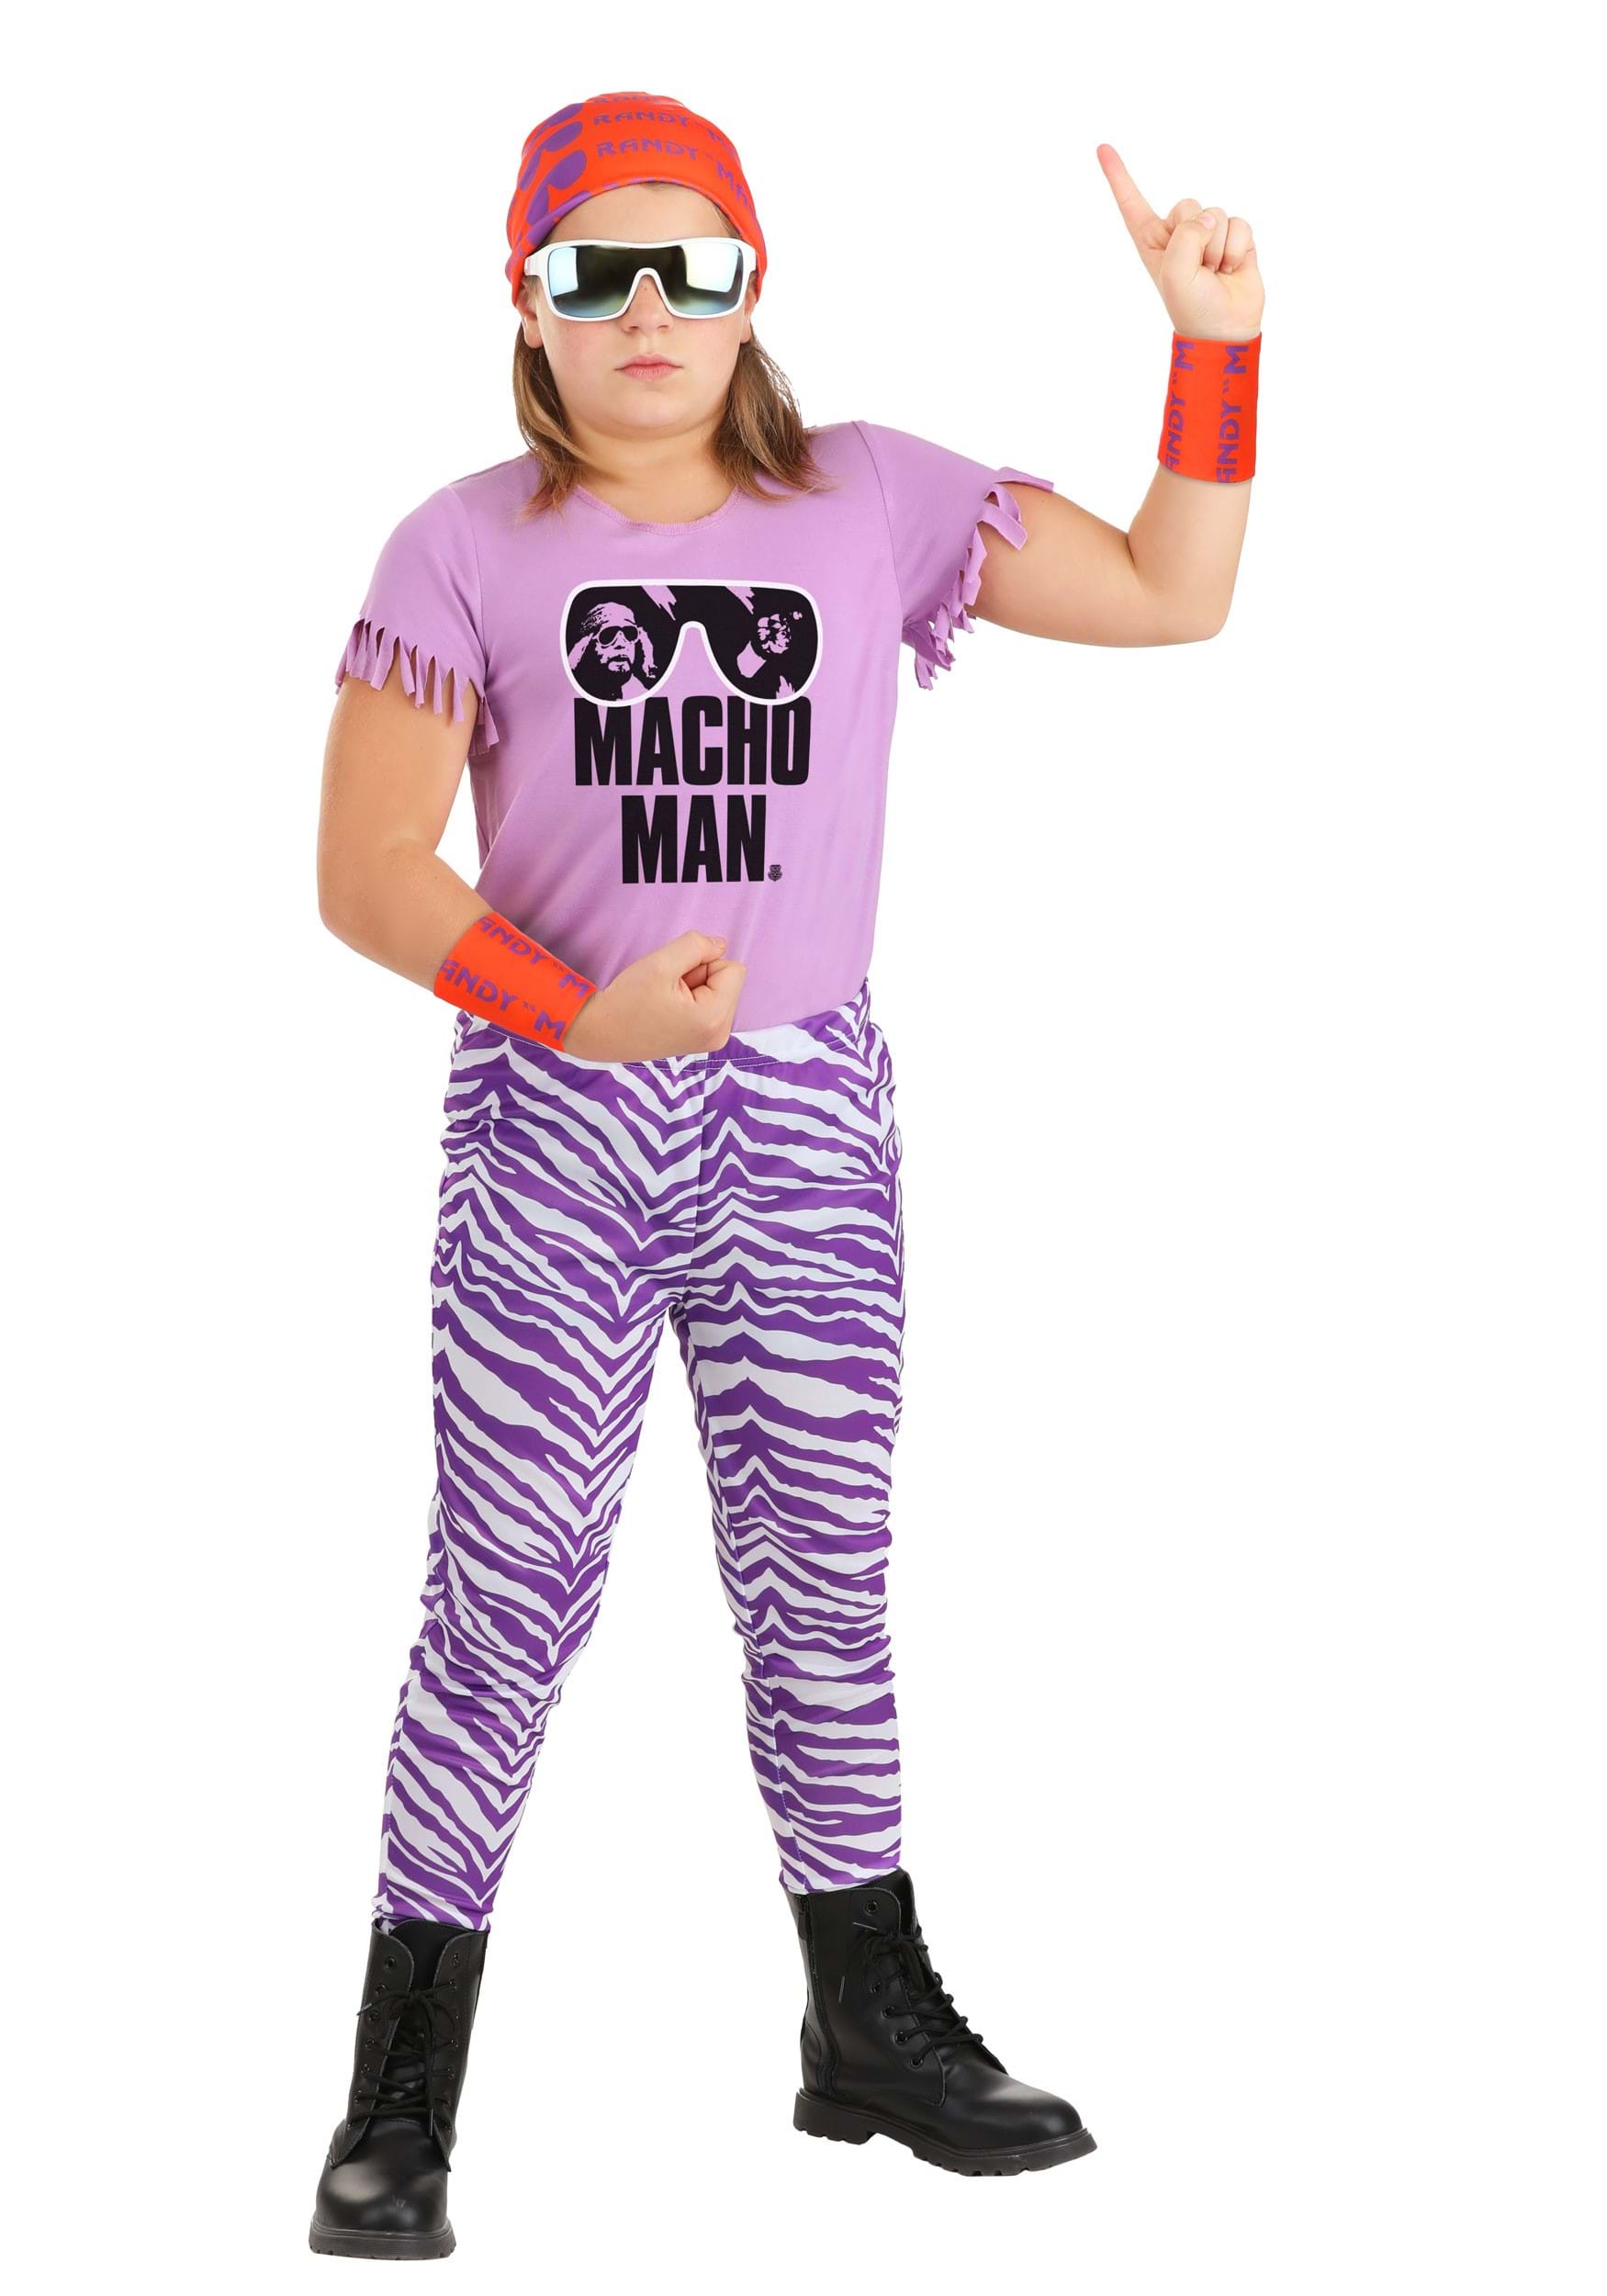 Photos - Fancy Dress WWE FUN Costumes  Macho Man Madness Costume |  Wrestling Kid's Costume P 